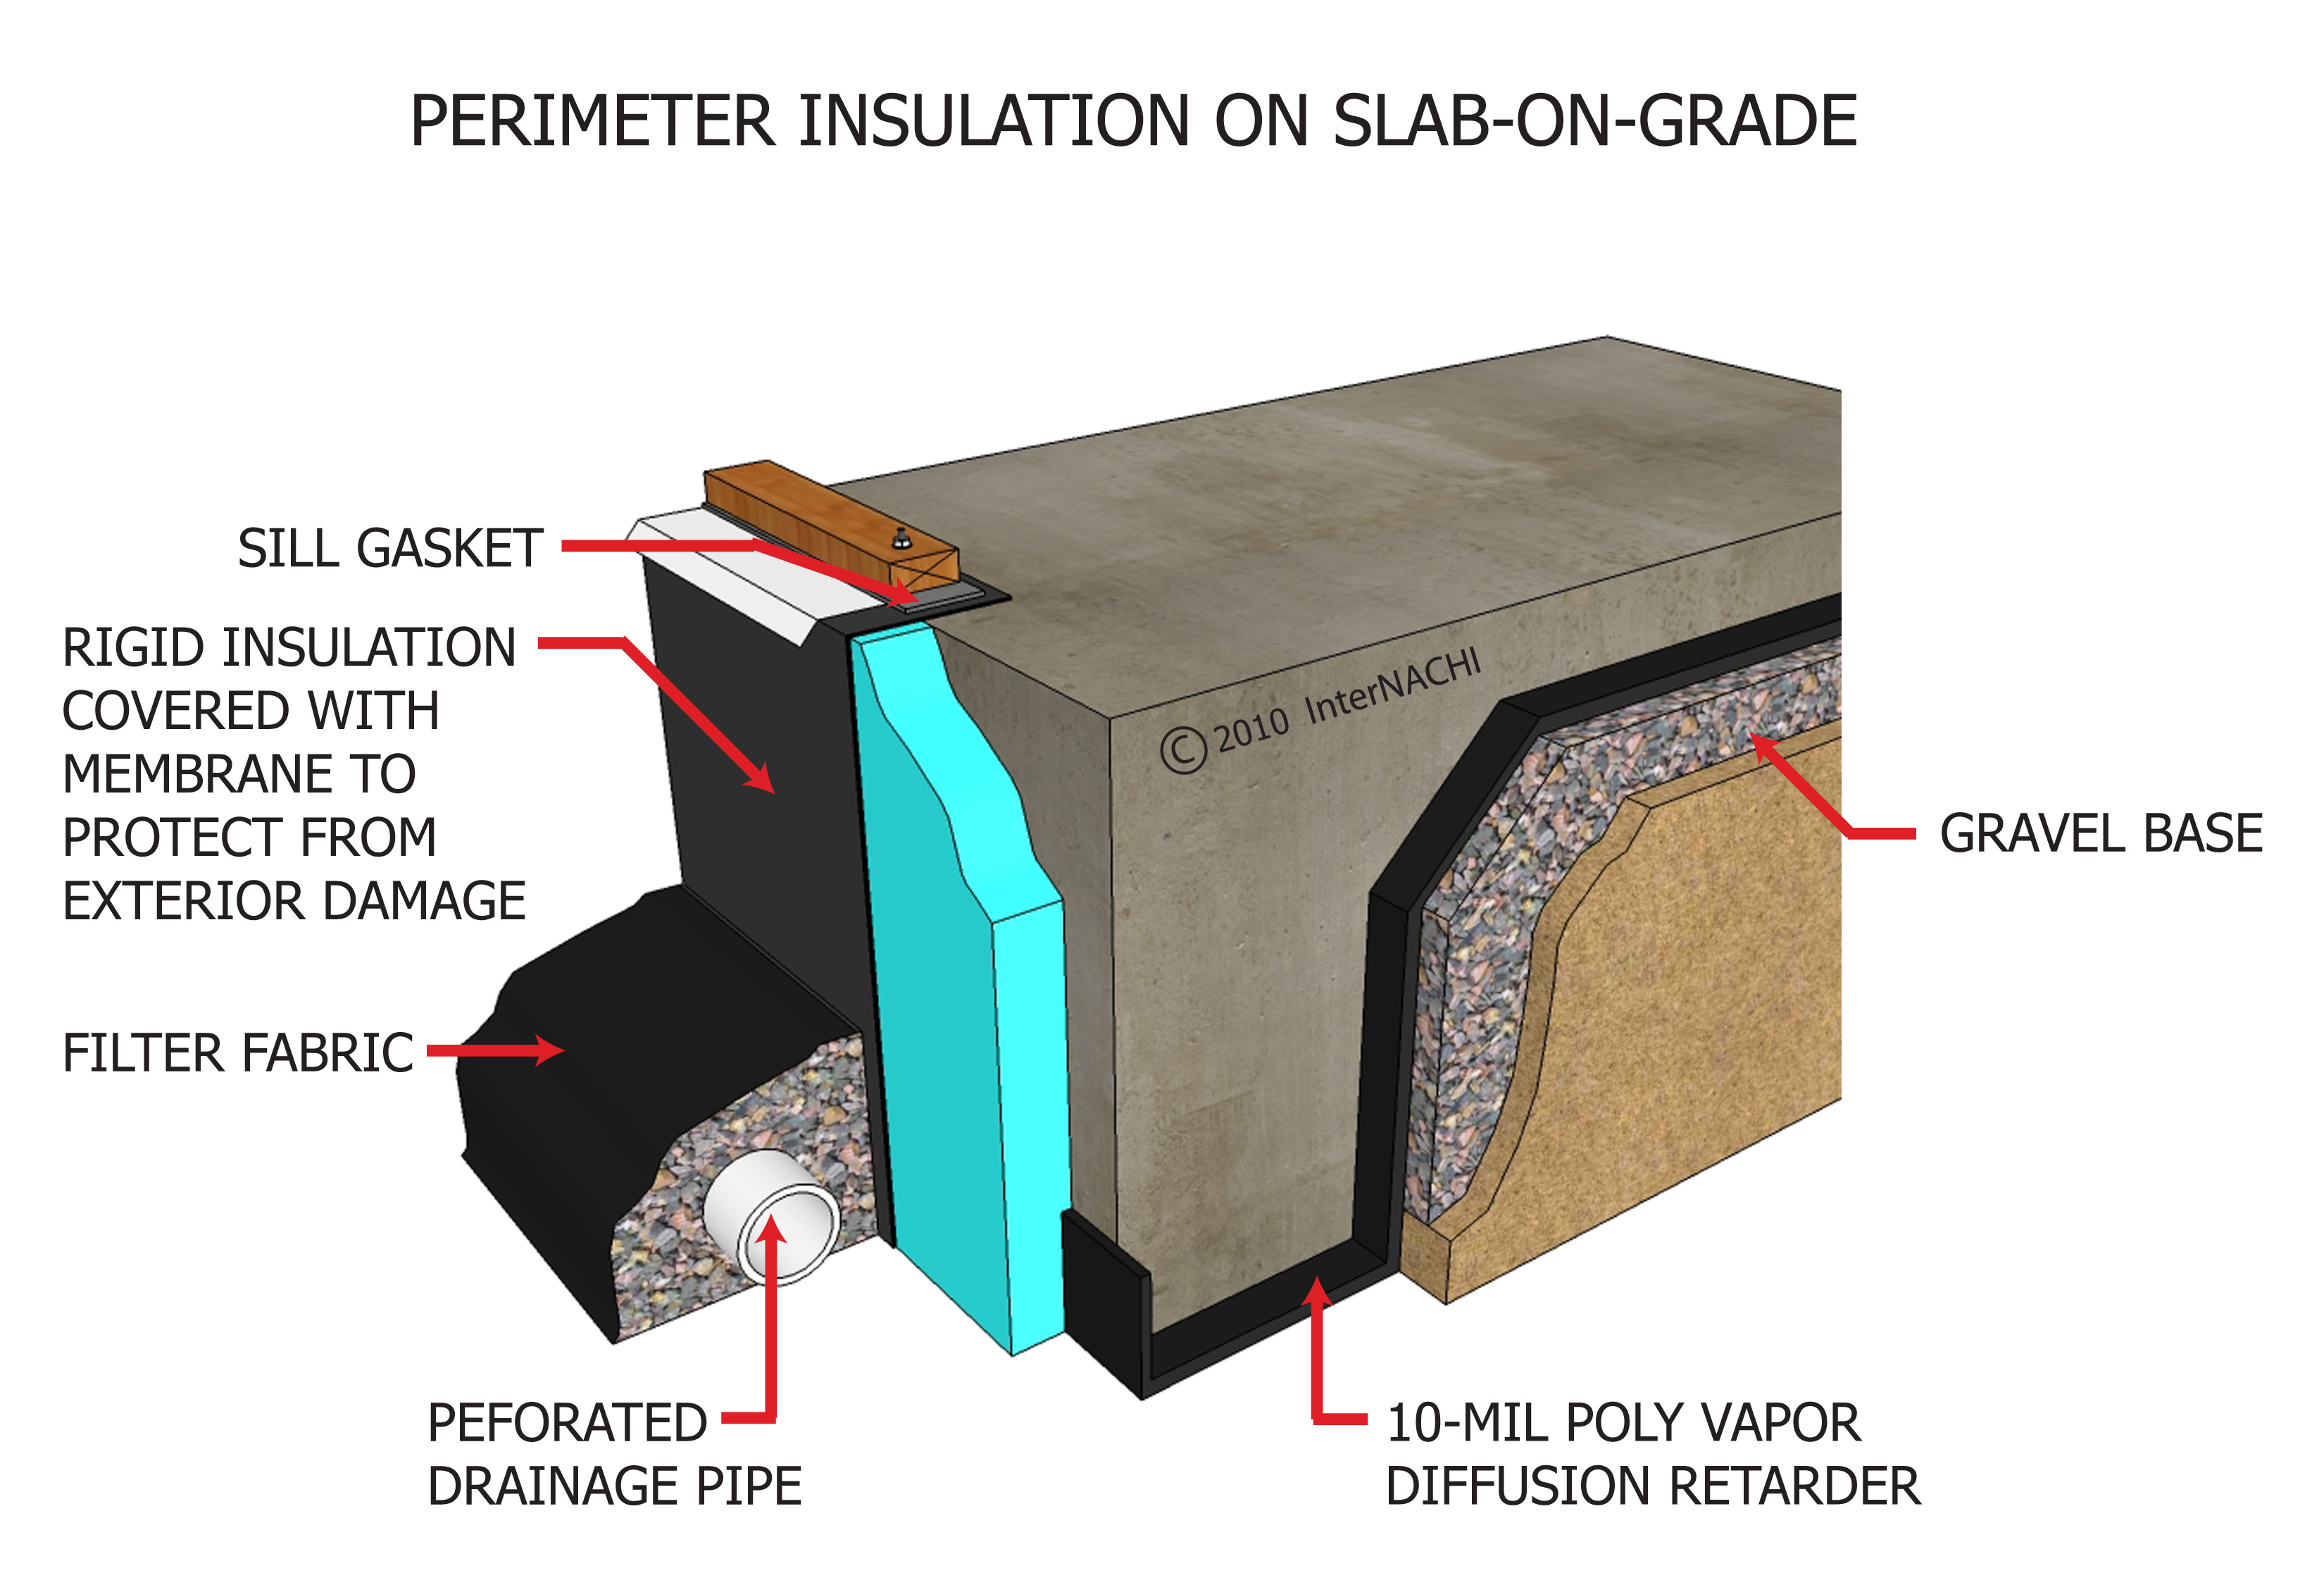 Perimeter insulation on slab-on-grade.